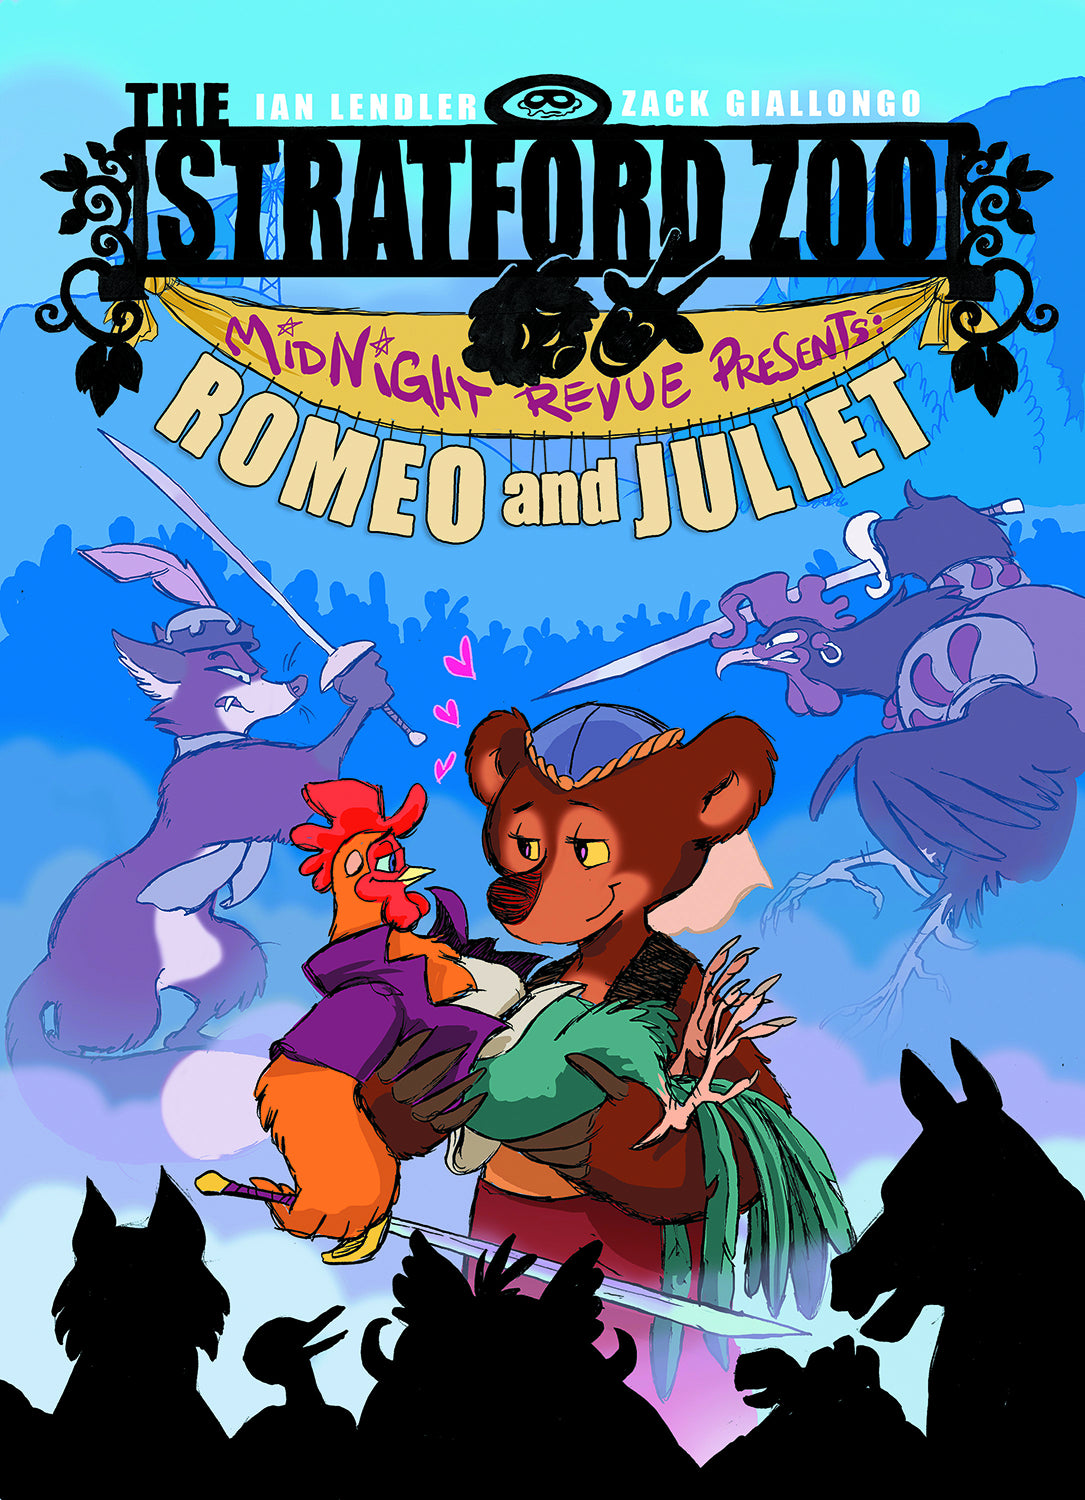 Stratford Zoo Midnight Revue Presents Romeo & Juliet